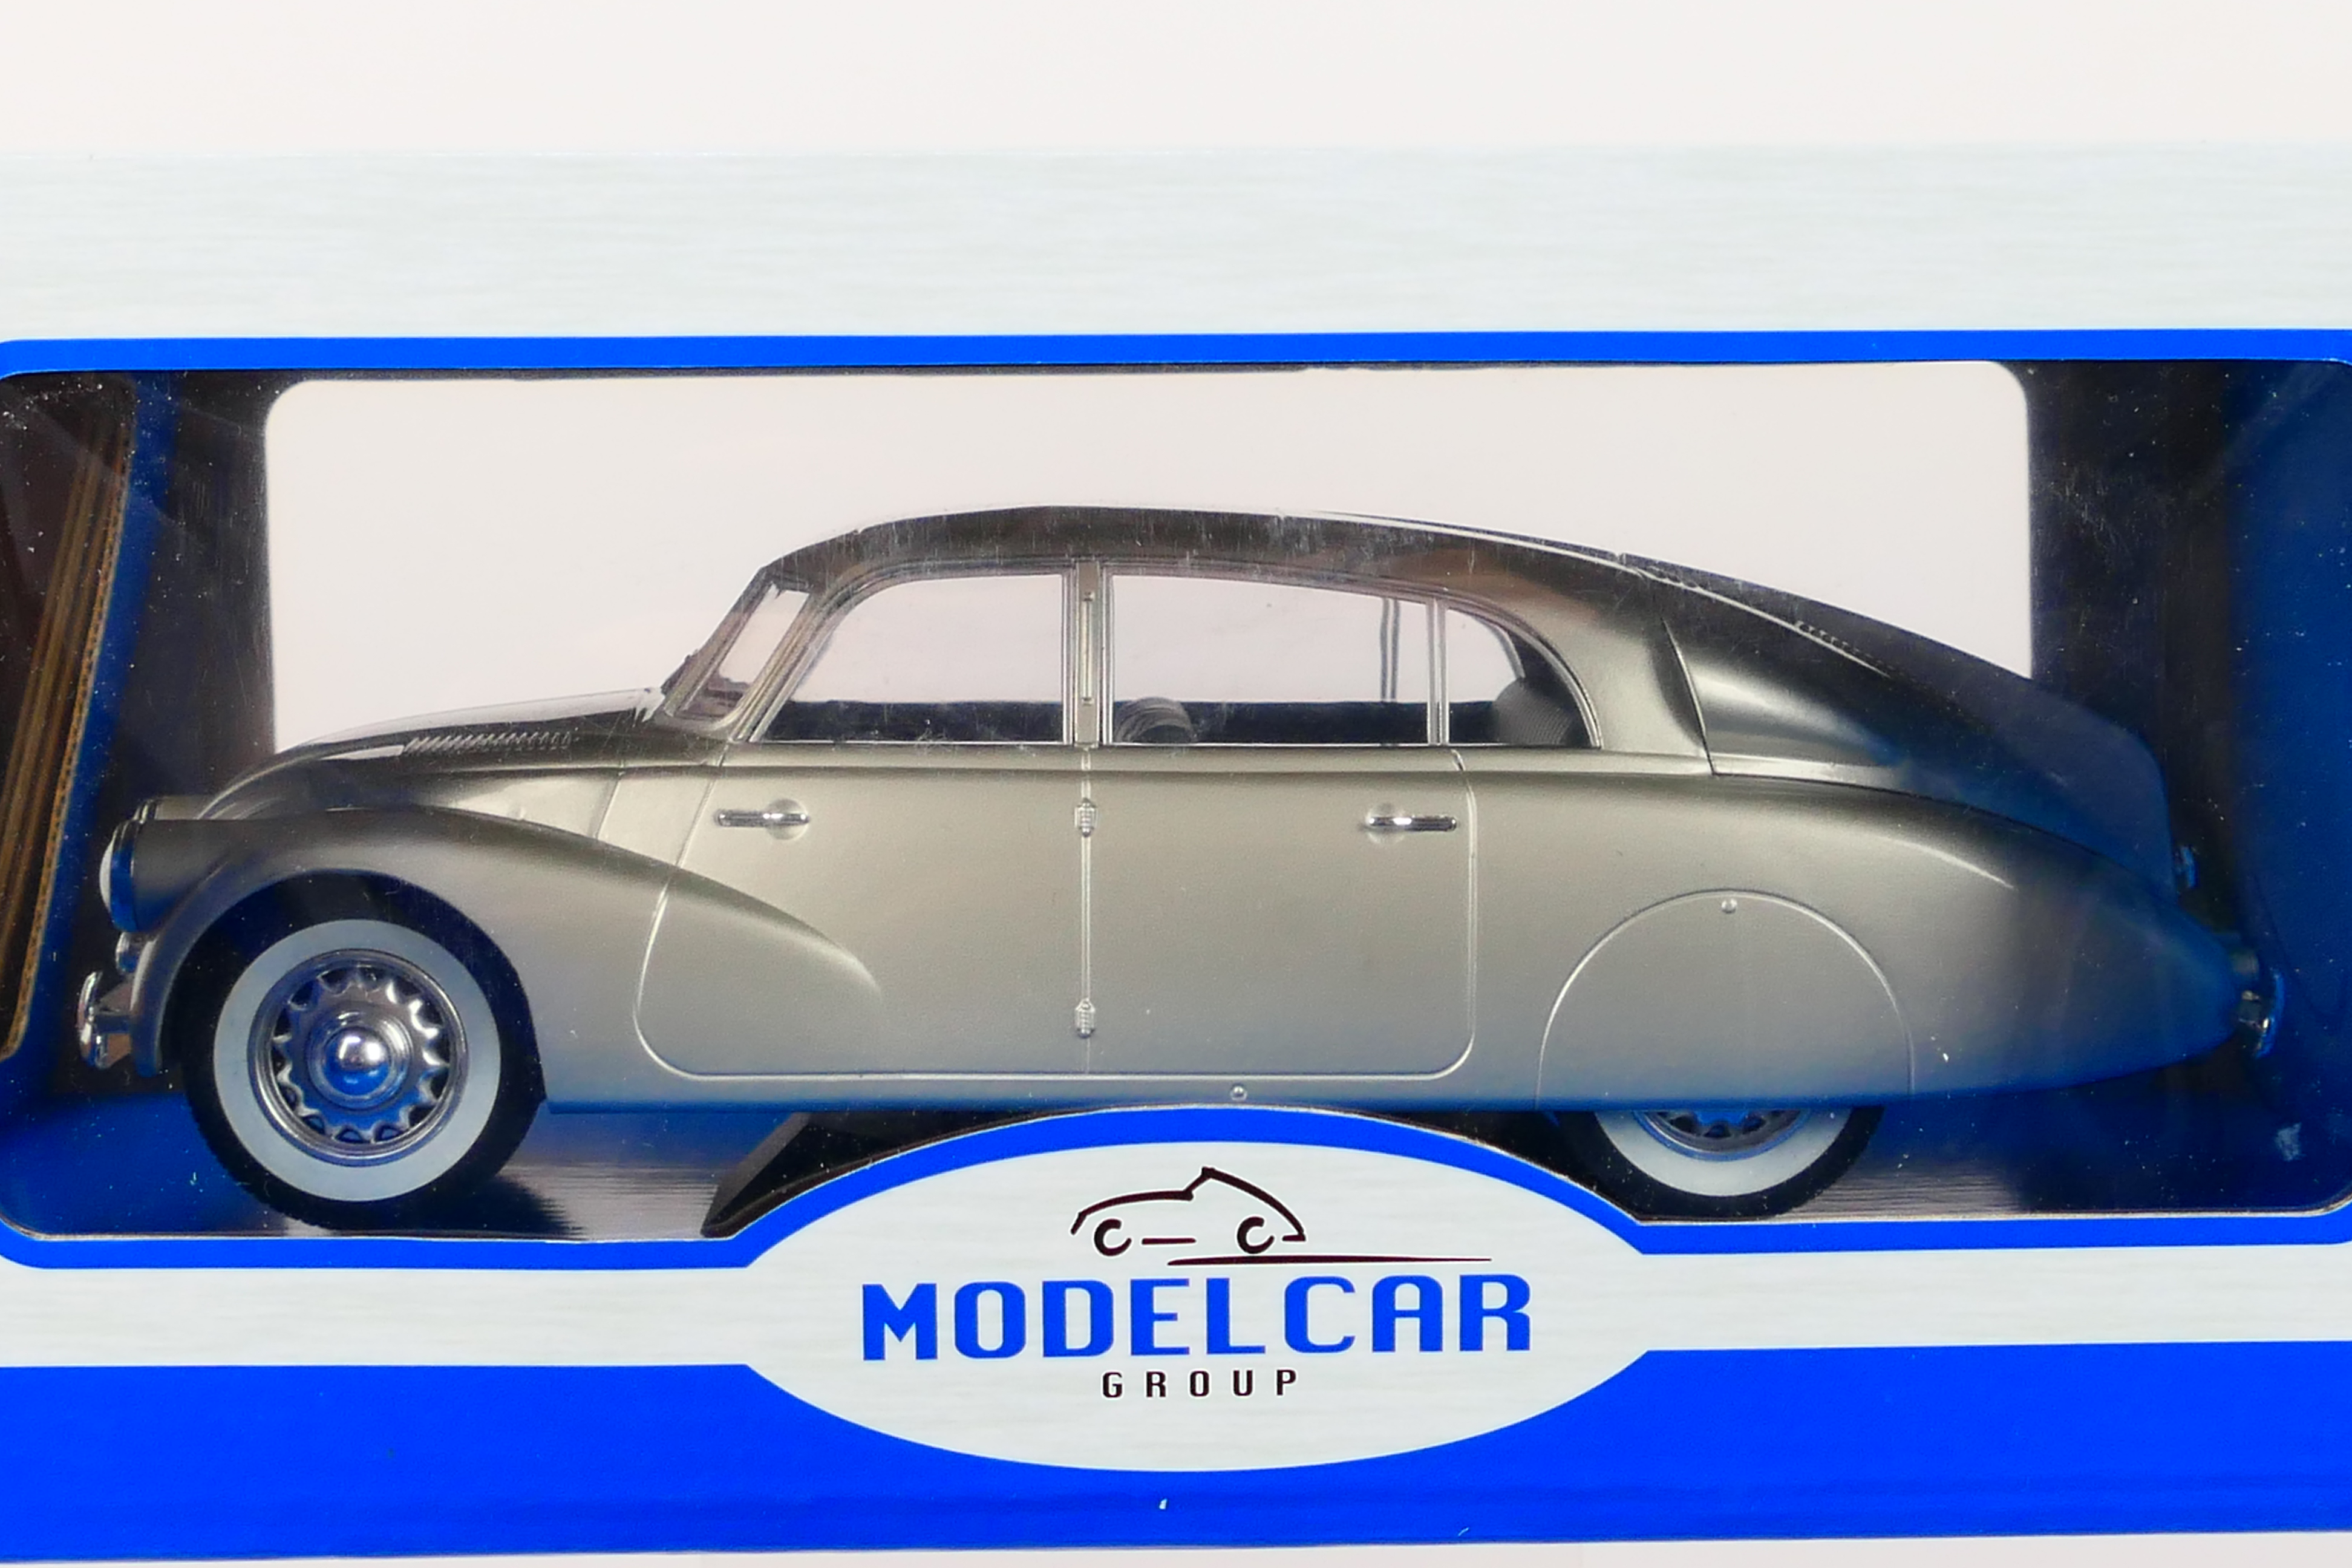 Model Car Group - A boxed 1:18 scale Model Car Group MCG18221 Tatra 87. - Image 2 of 4